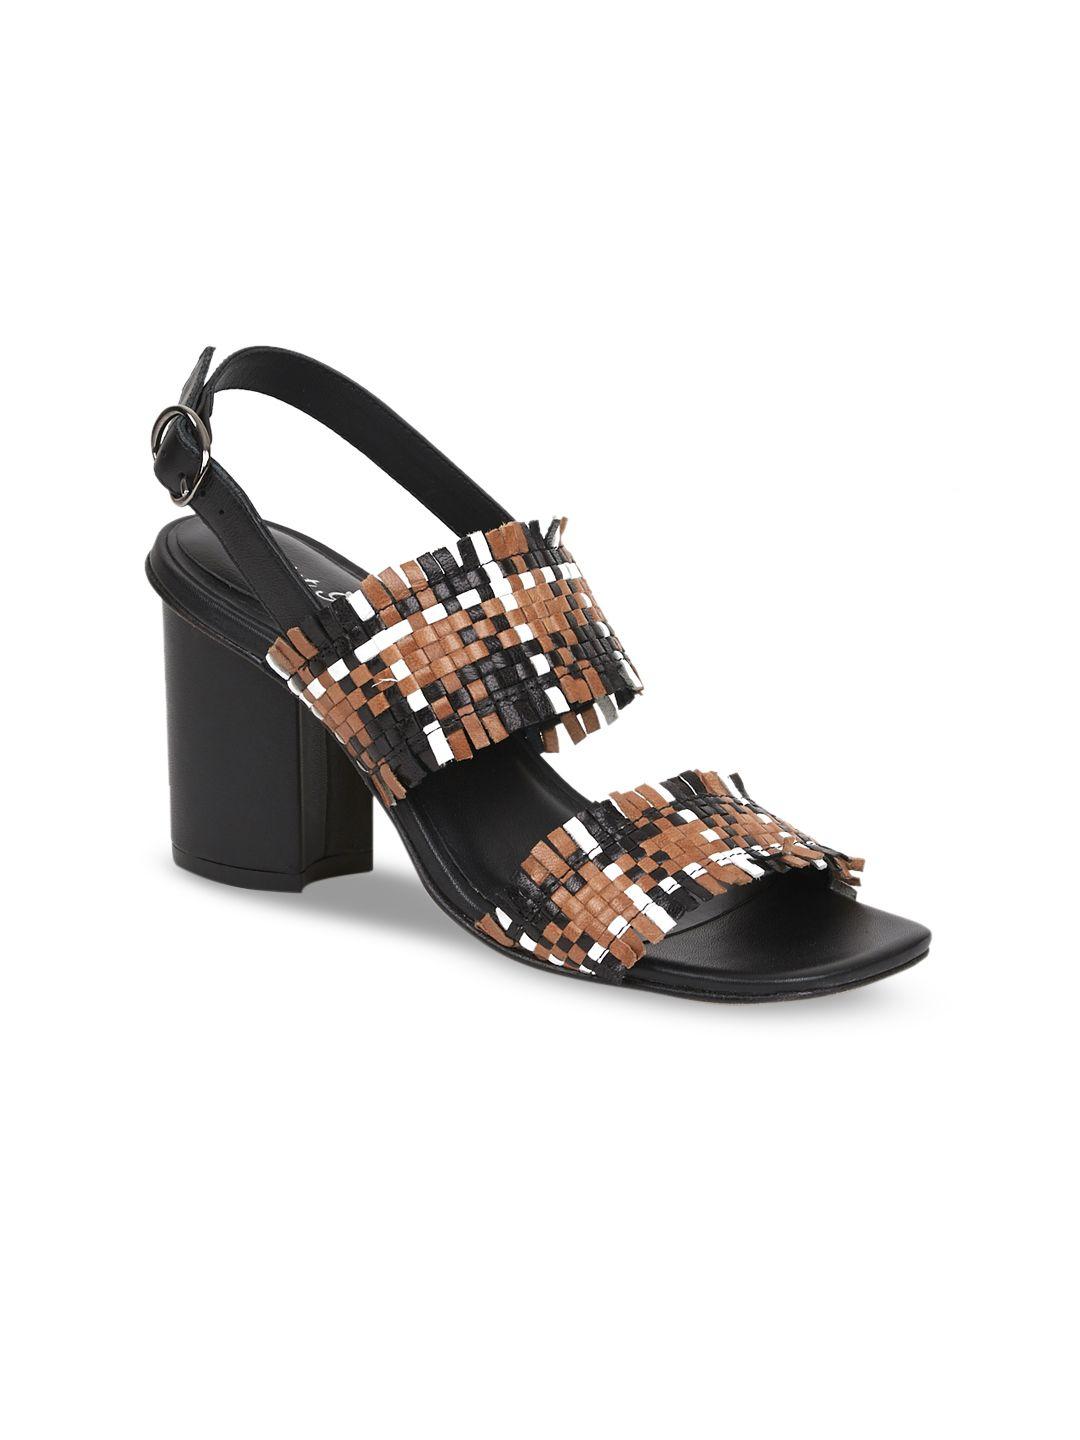 saint-g-women-multicoloured-woven-design-leather-sandals